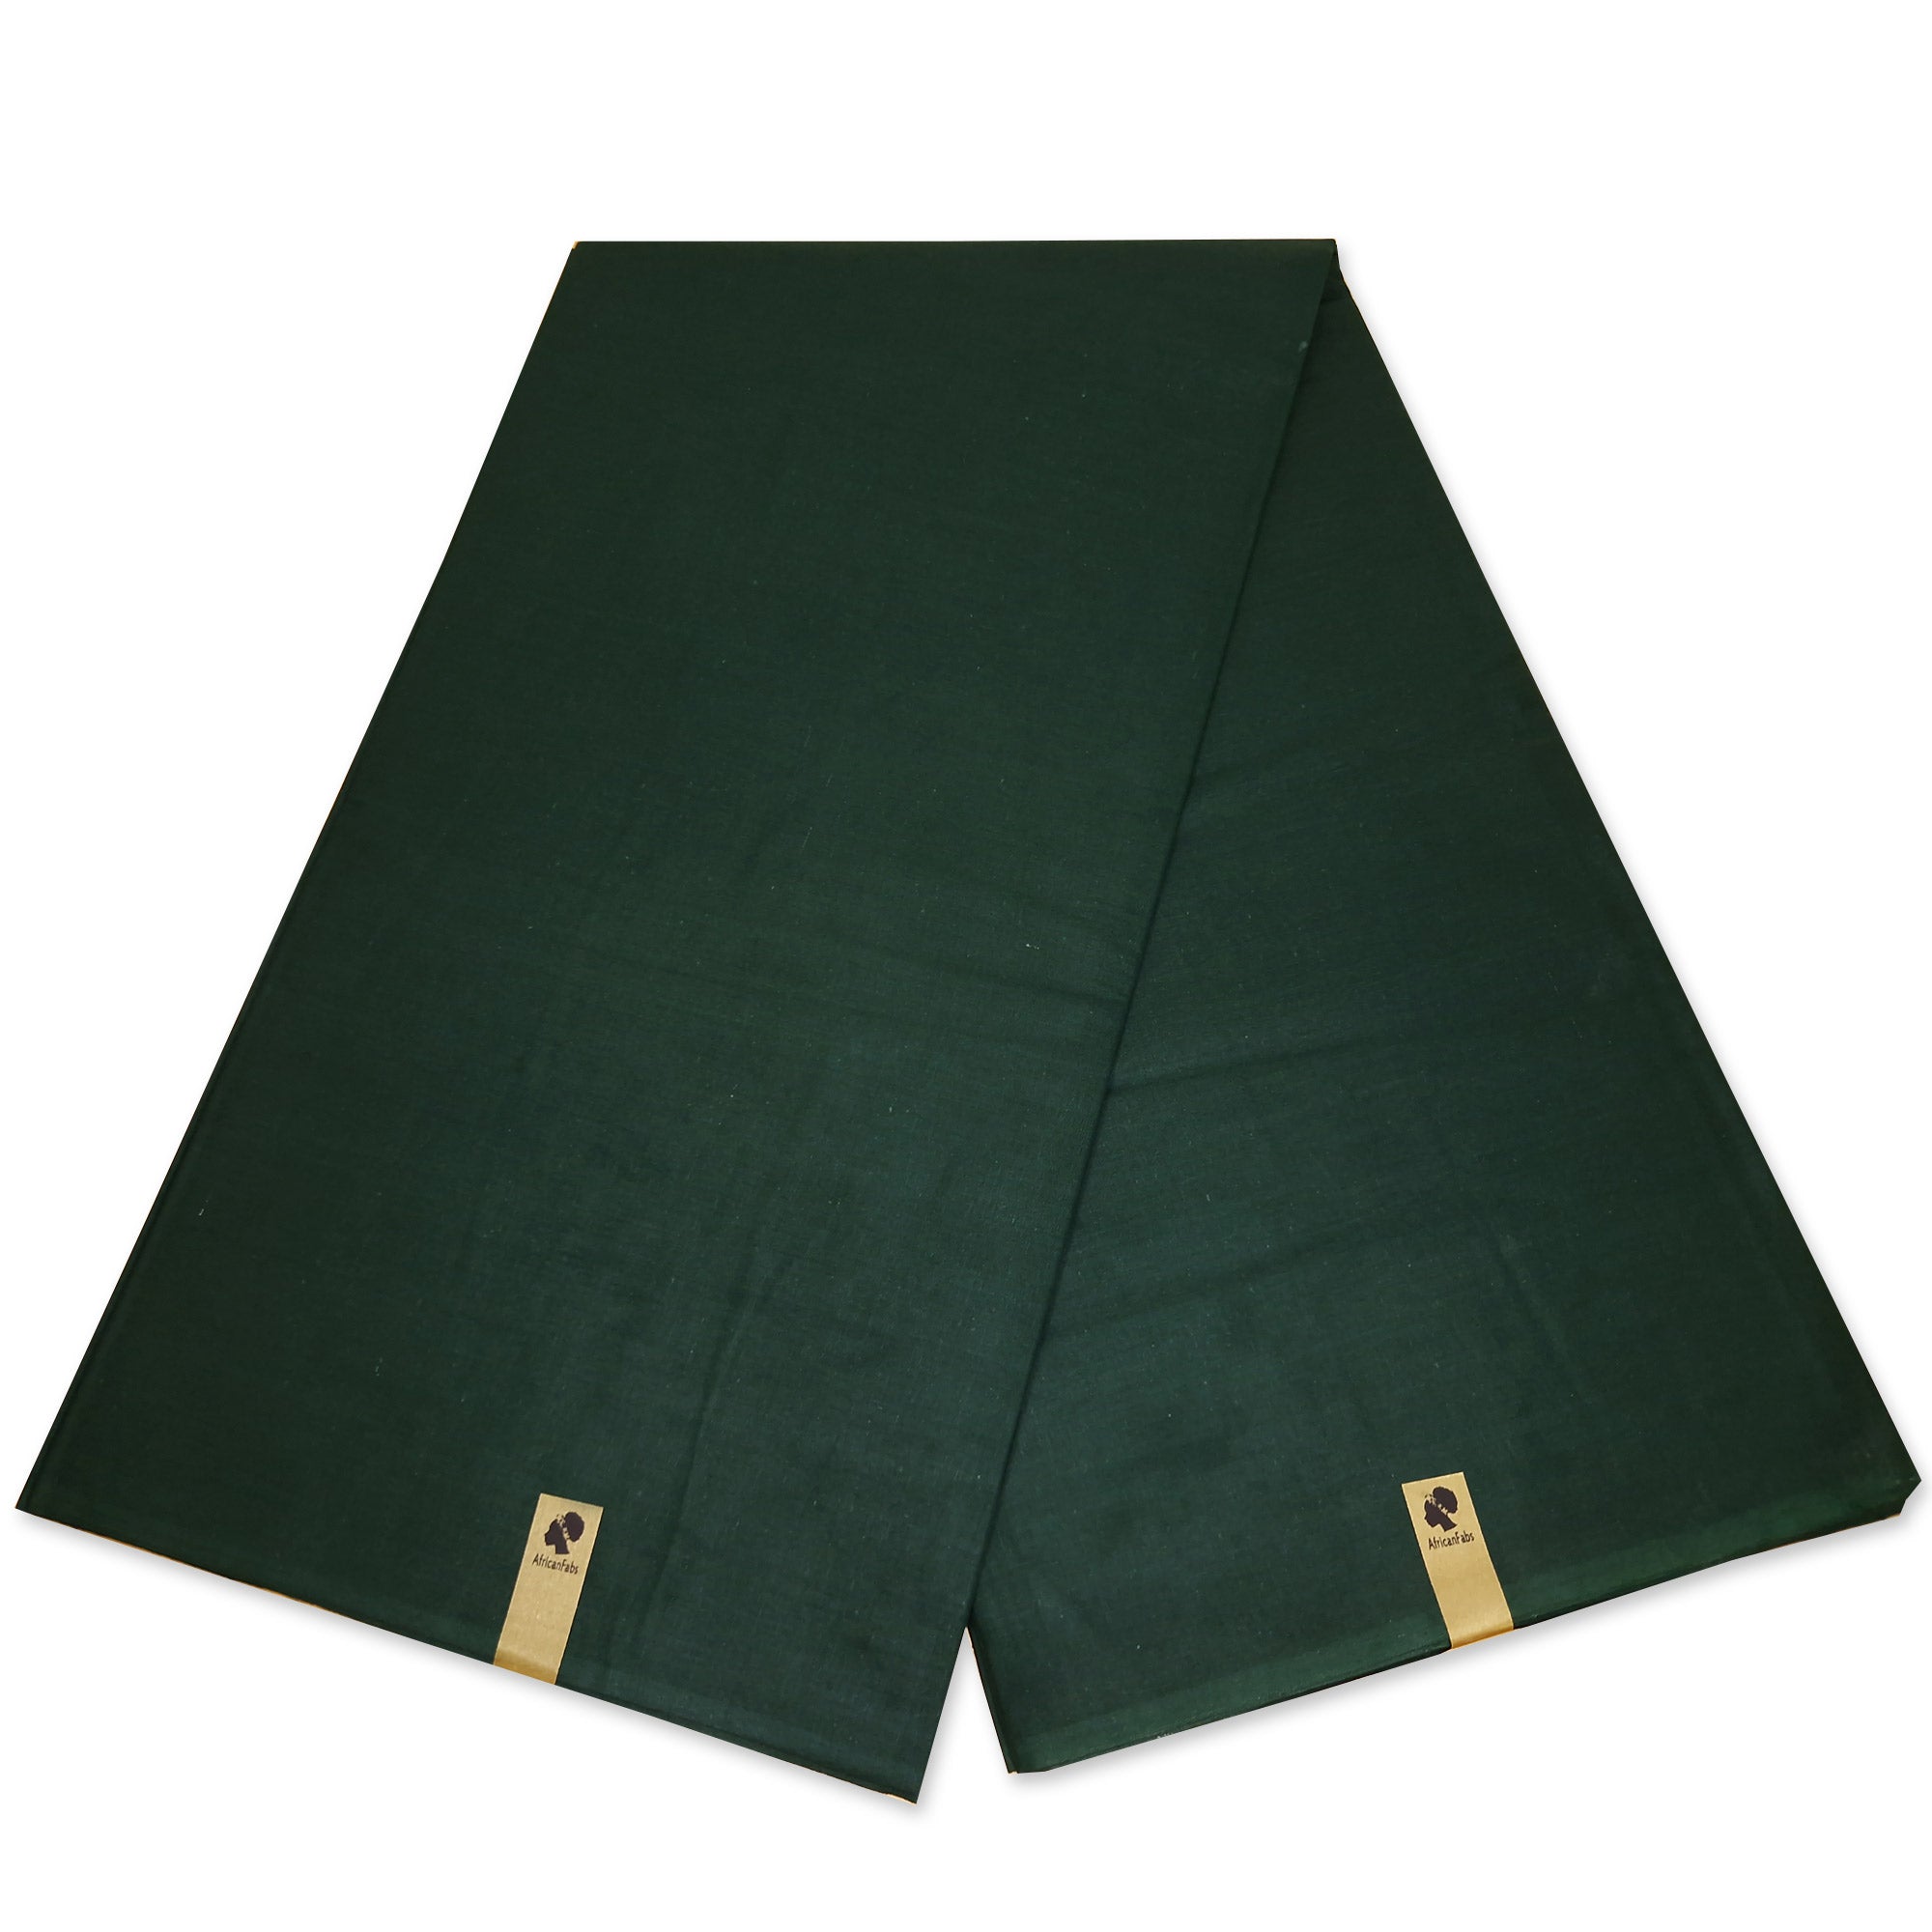 Tela Lisa Verde - Color verde liso - 100% algodón